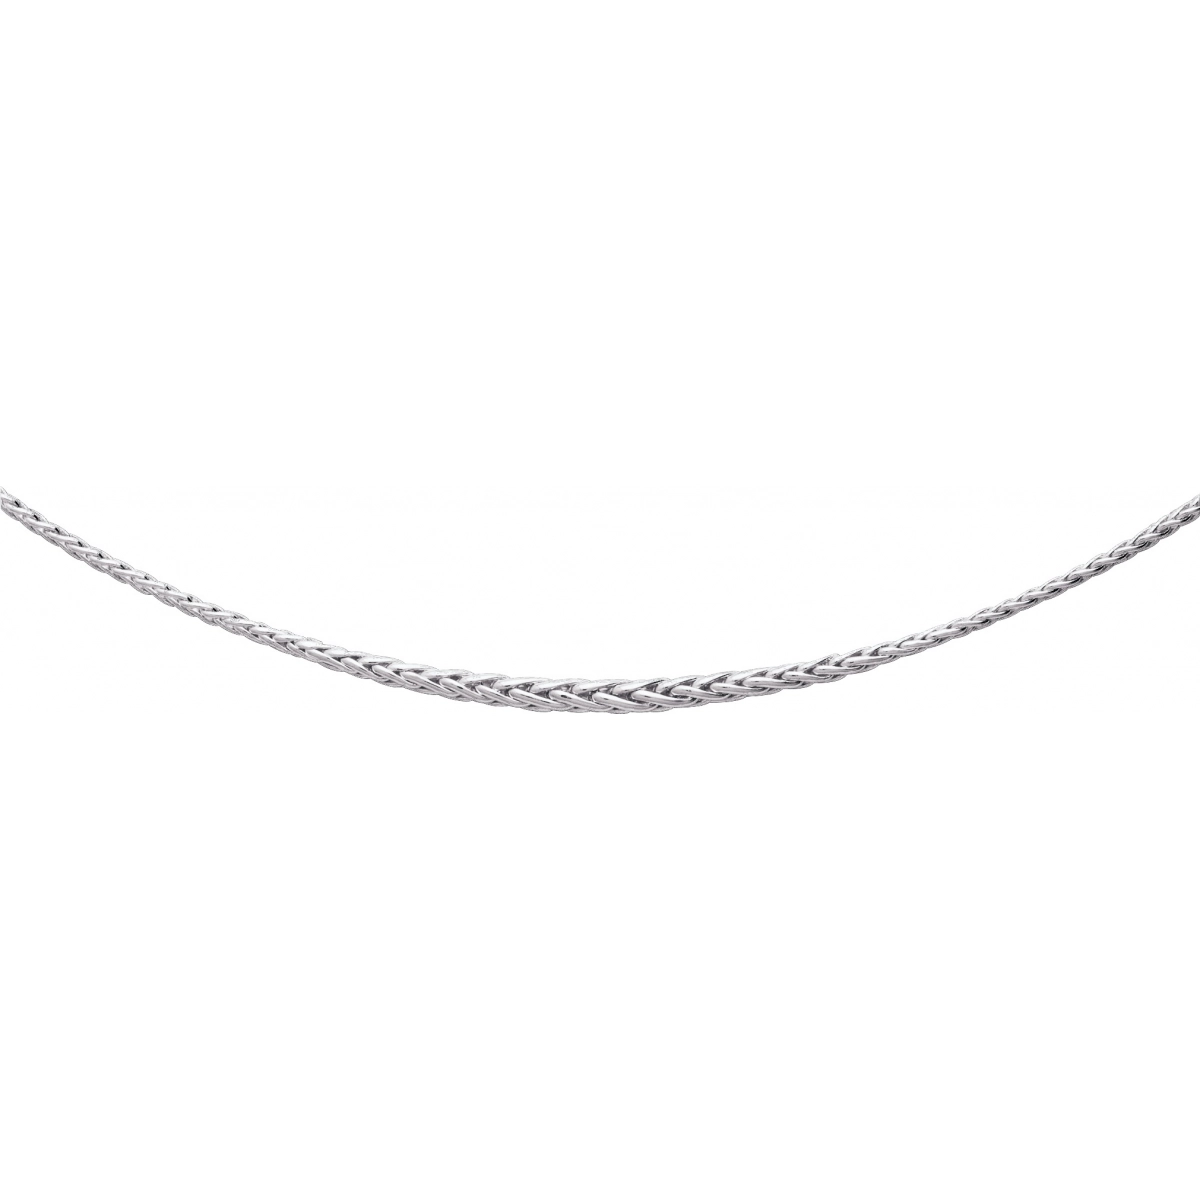 Necklace 925 Silver Lua Blanca  325421 - Size 42